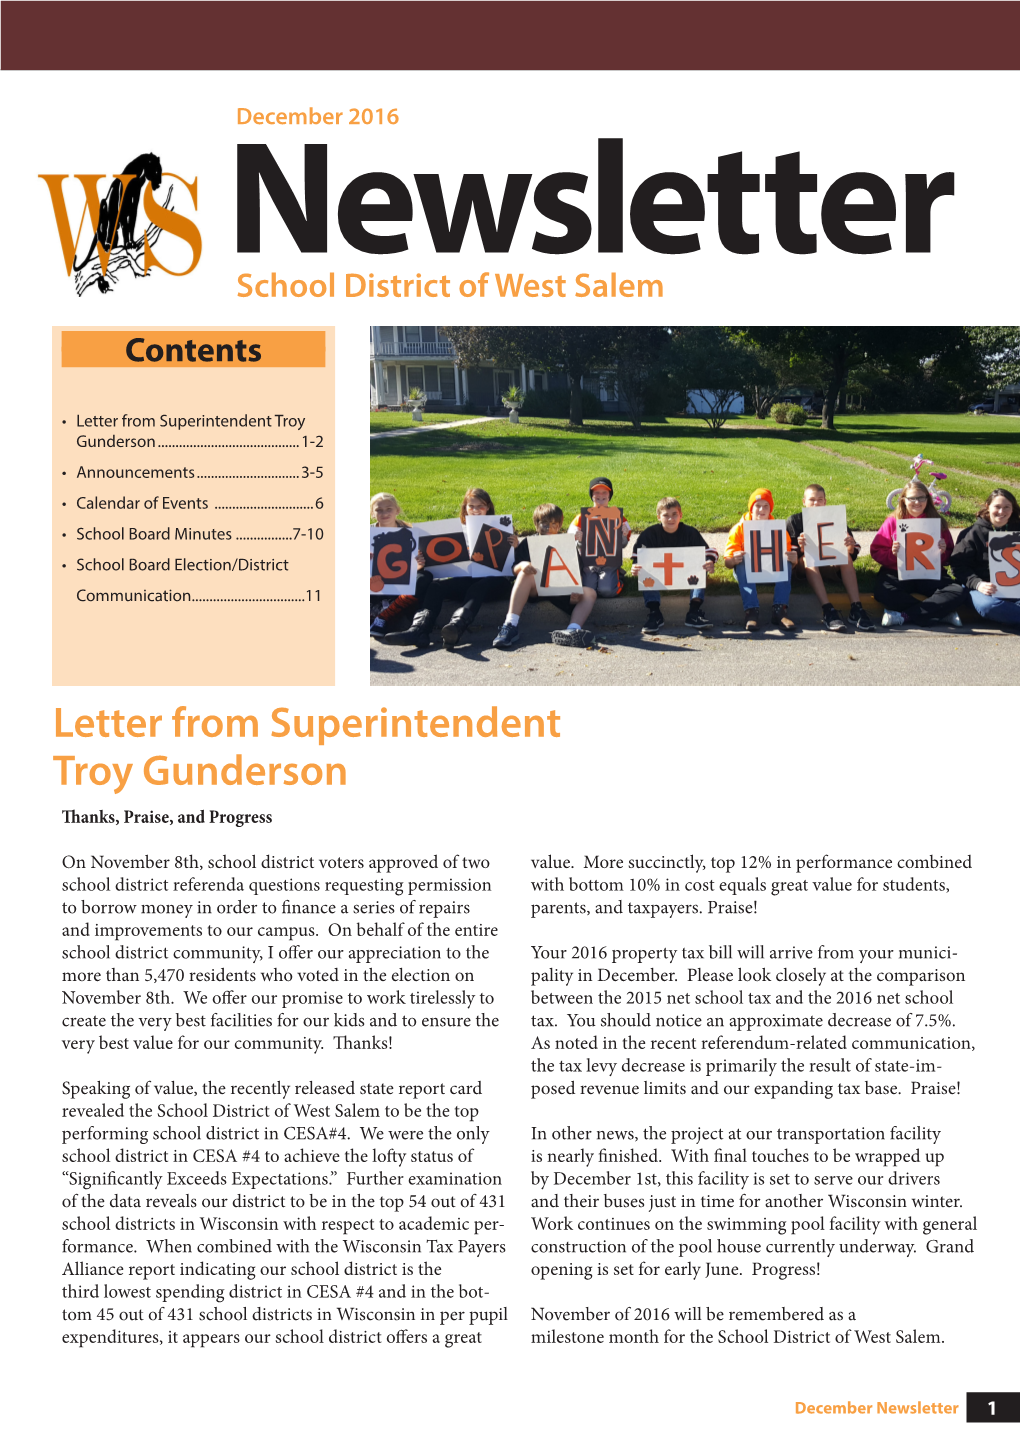 Letter from Superintendent Troy Gunderson